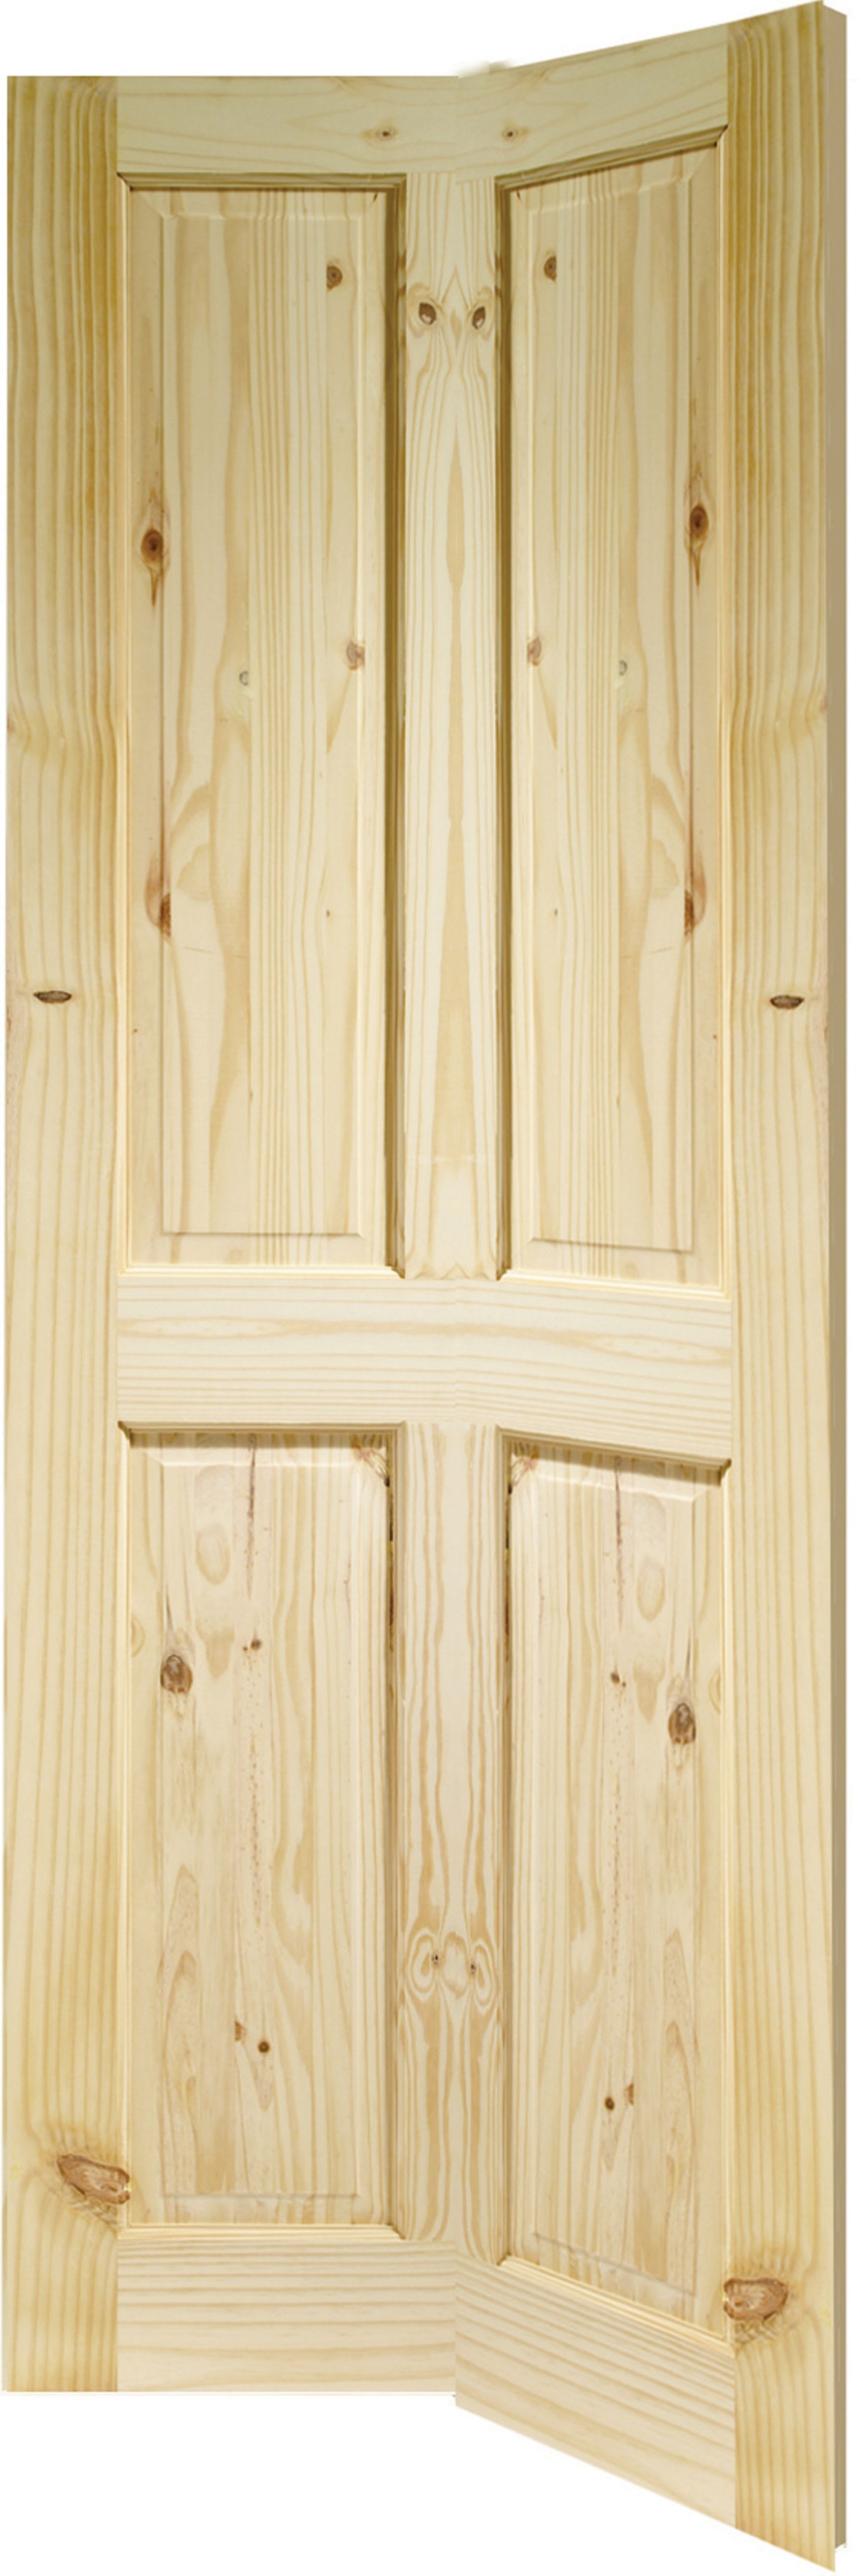 Wickes Chester Knotty Pine 4 Panel Internal Bi-Fold